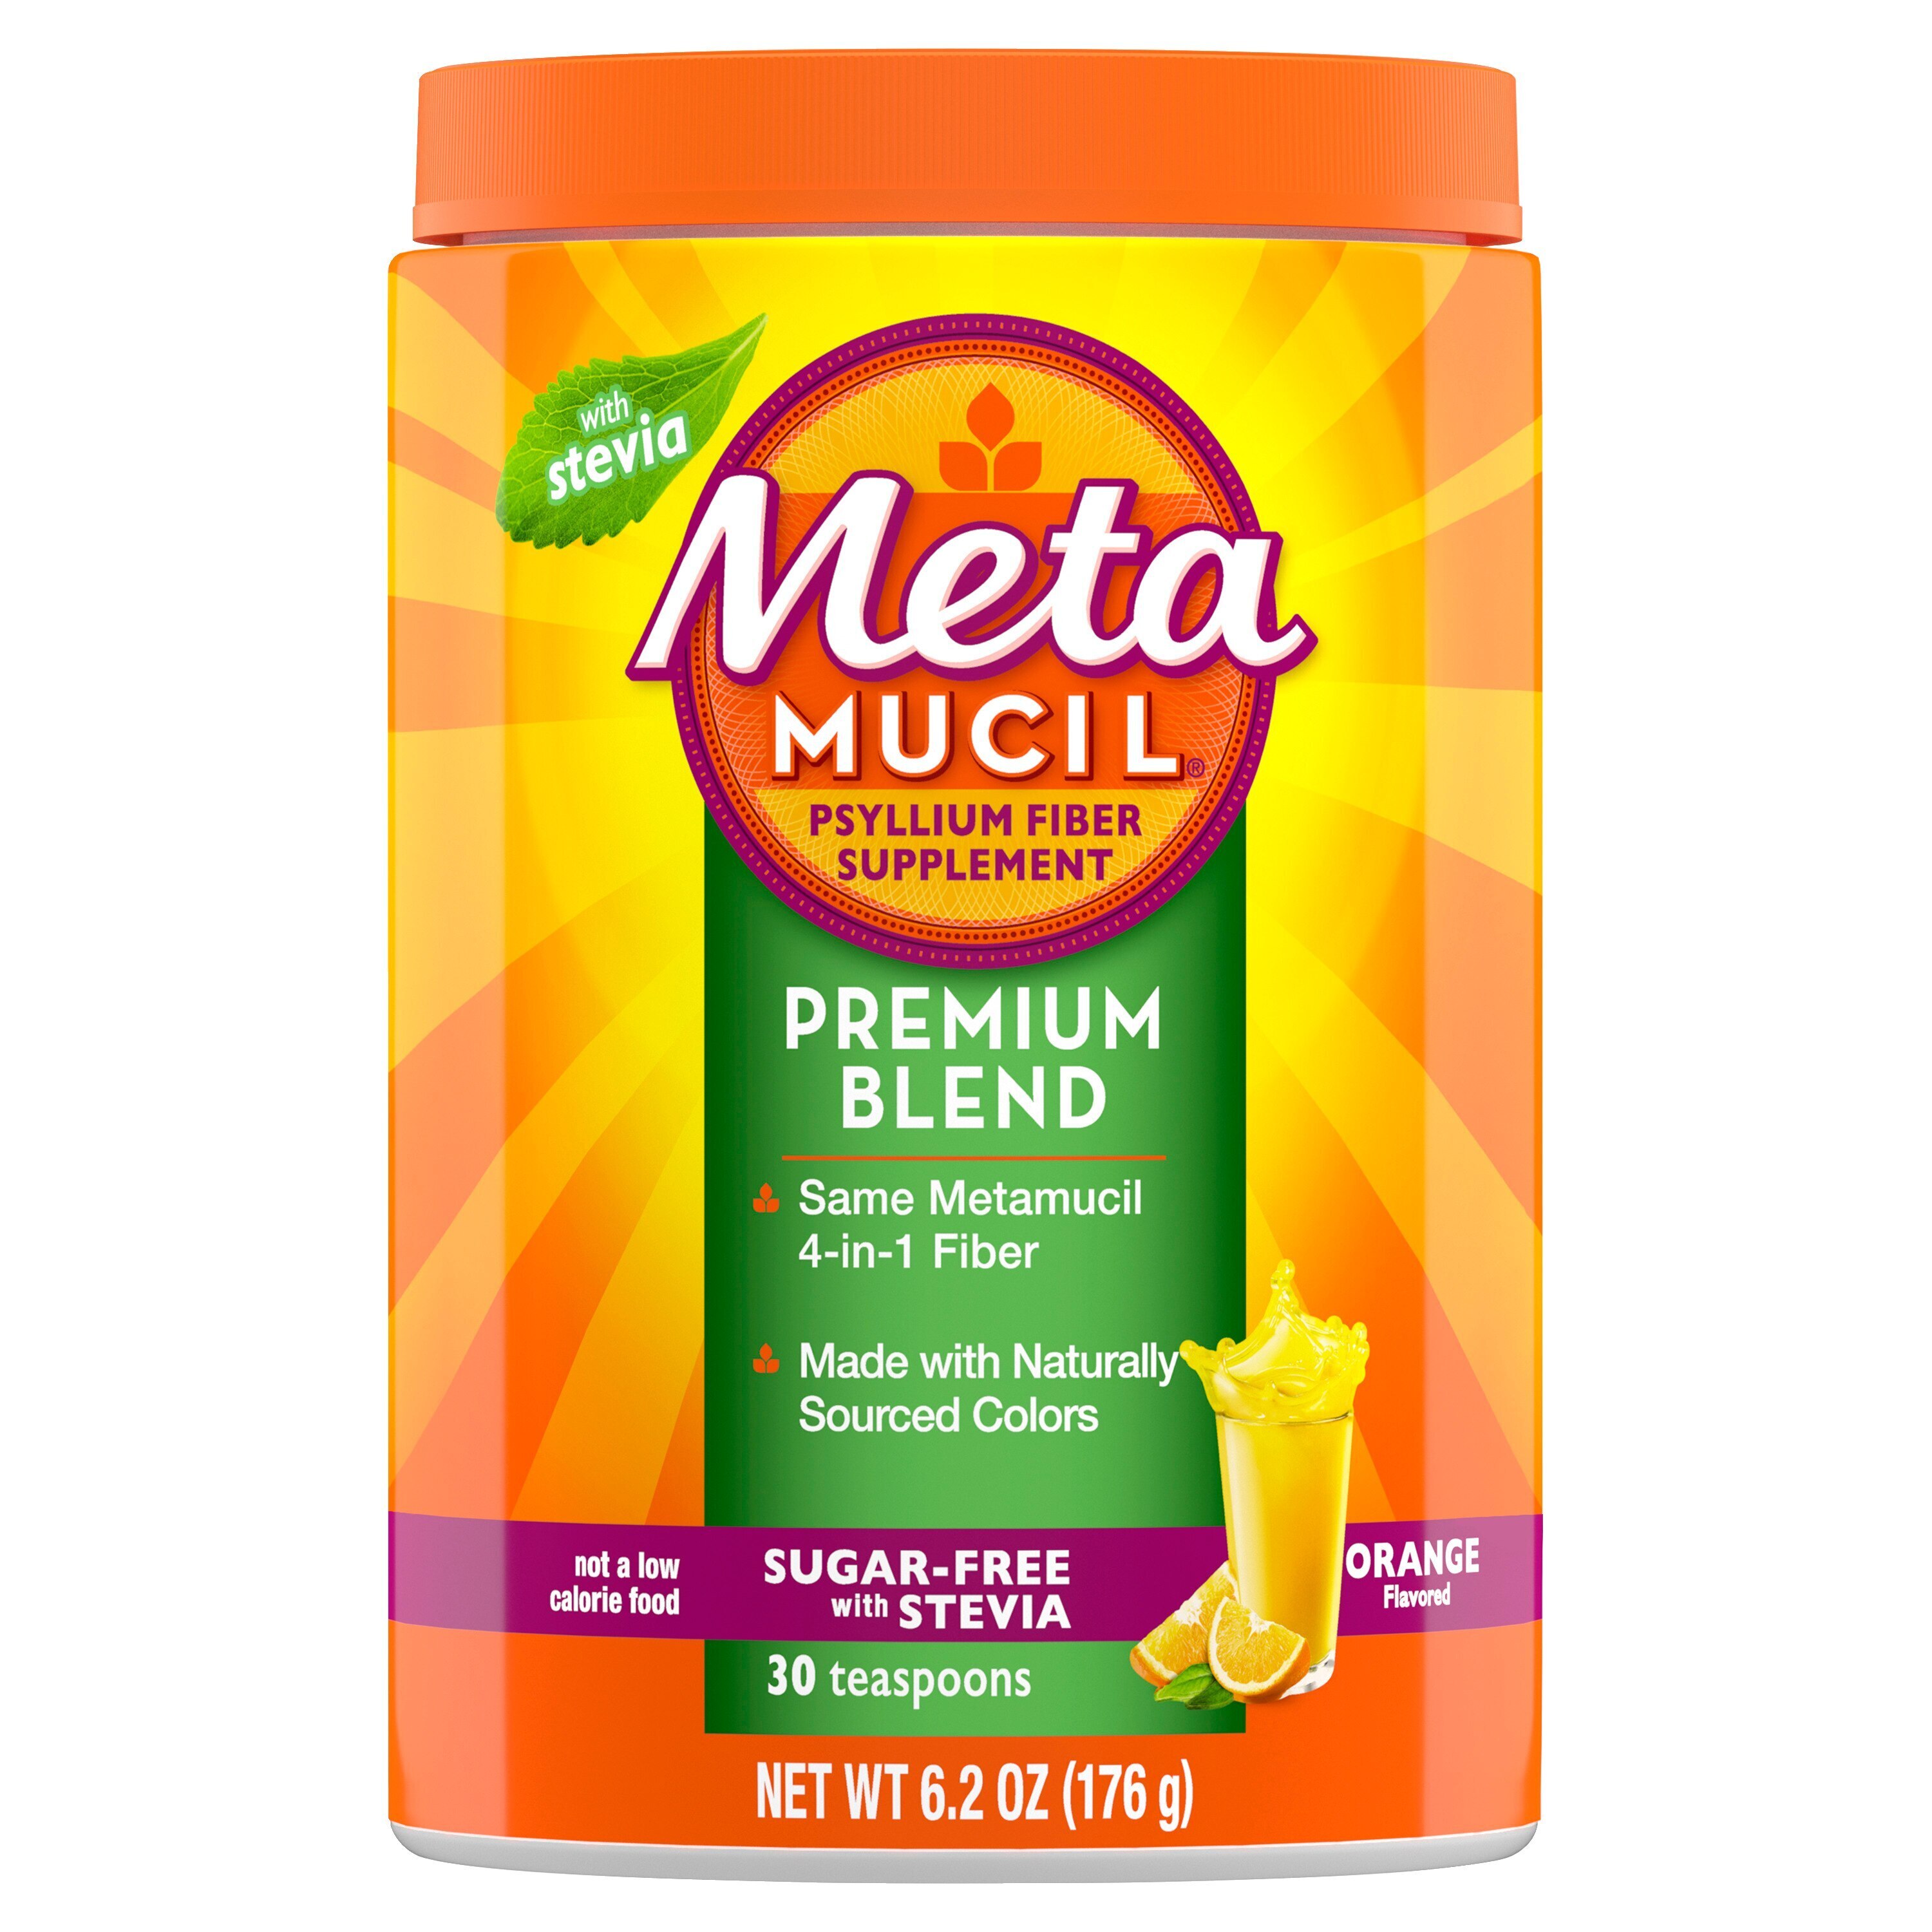 Metamucil Premium Blend Daily Psyllium Fiber Powder, Orange, 30 Servings